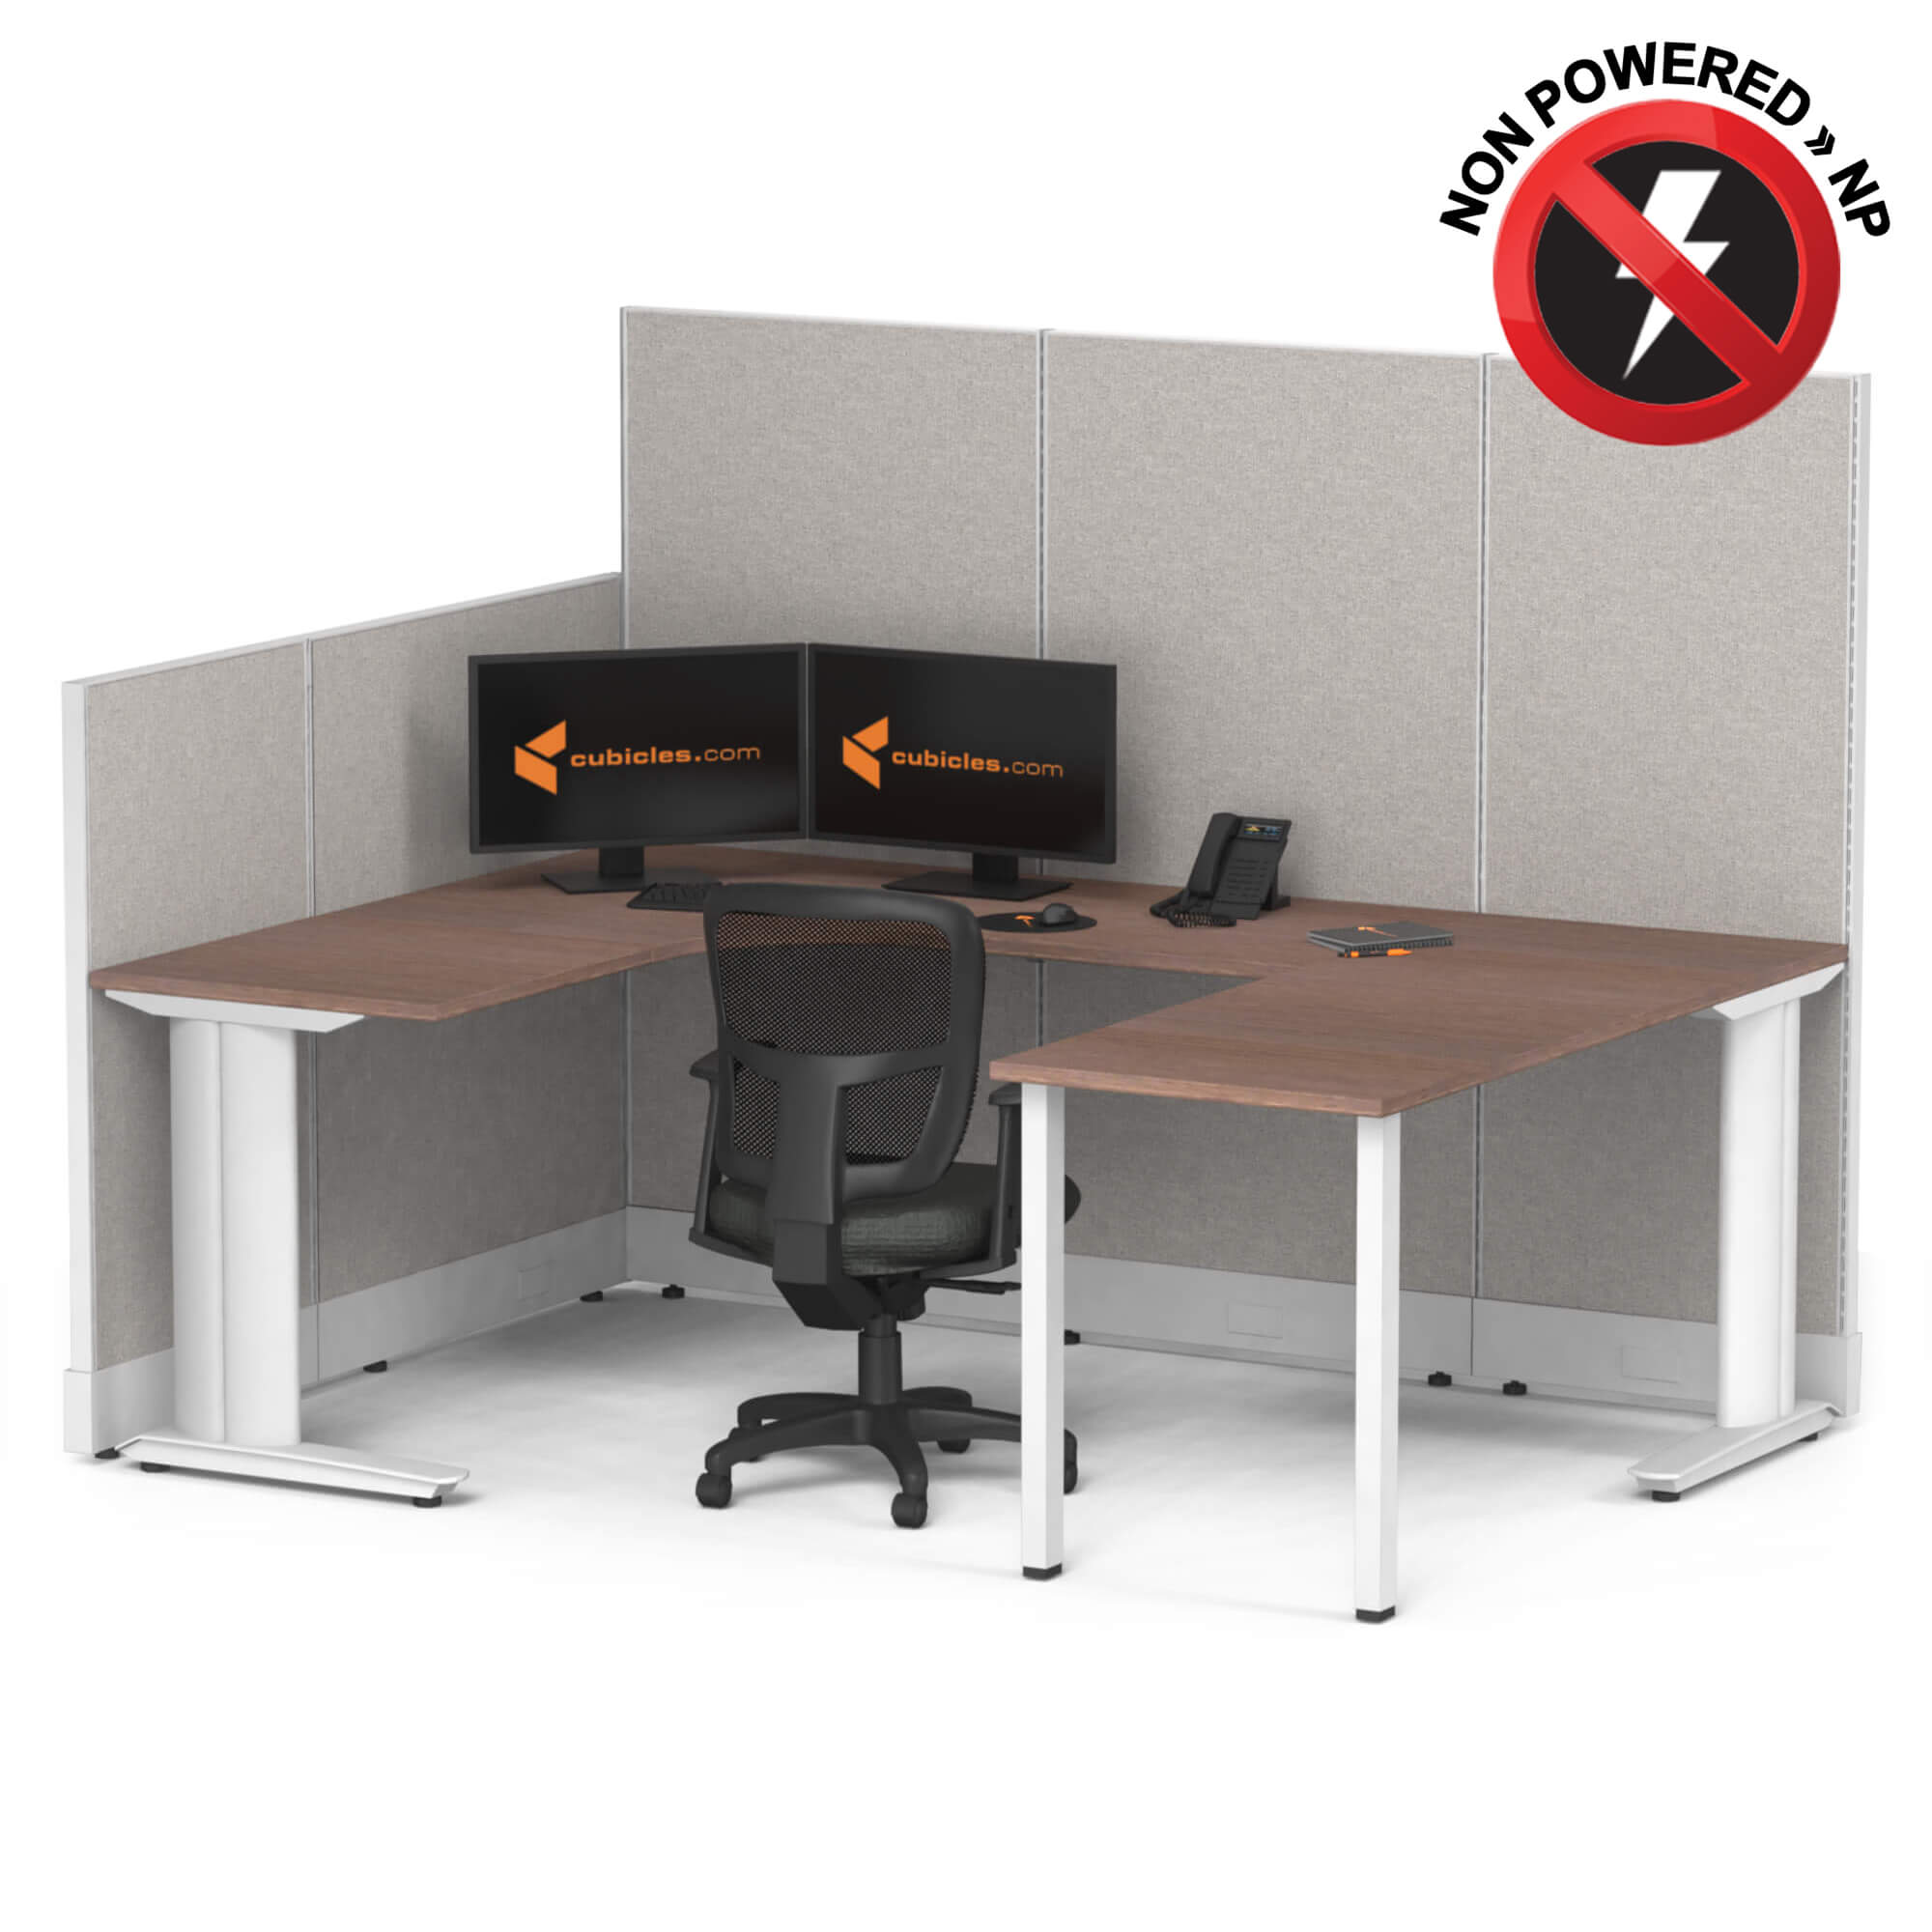 cubicle-desk-u-shaped-workstation-non-powered-sign.jpg